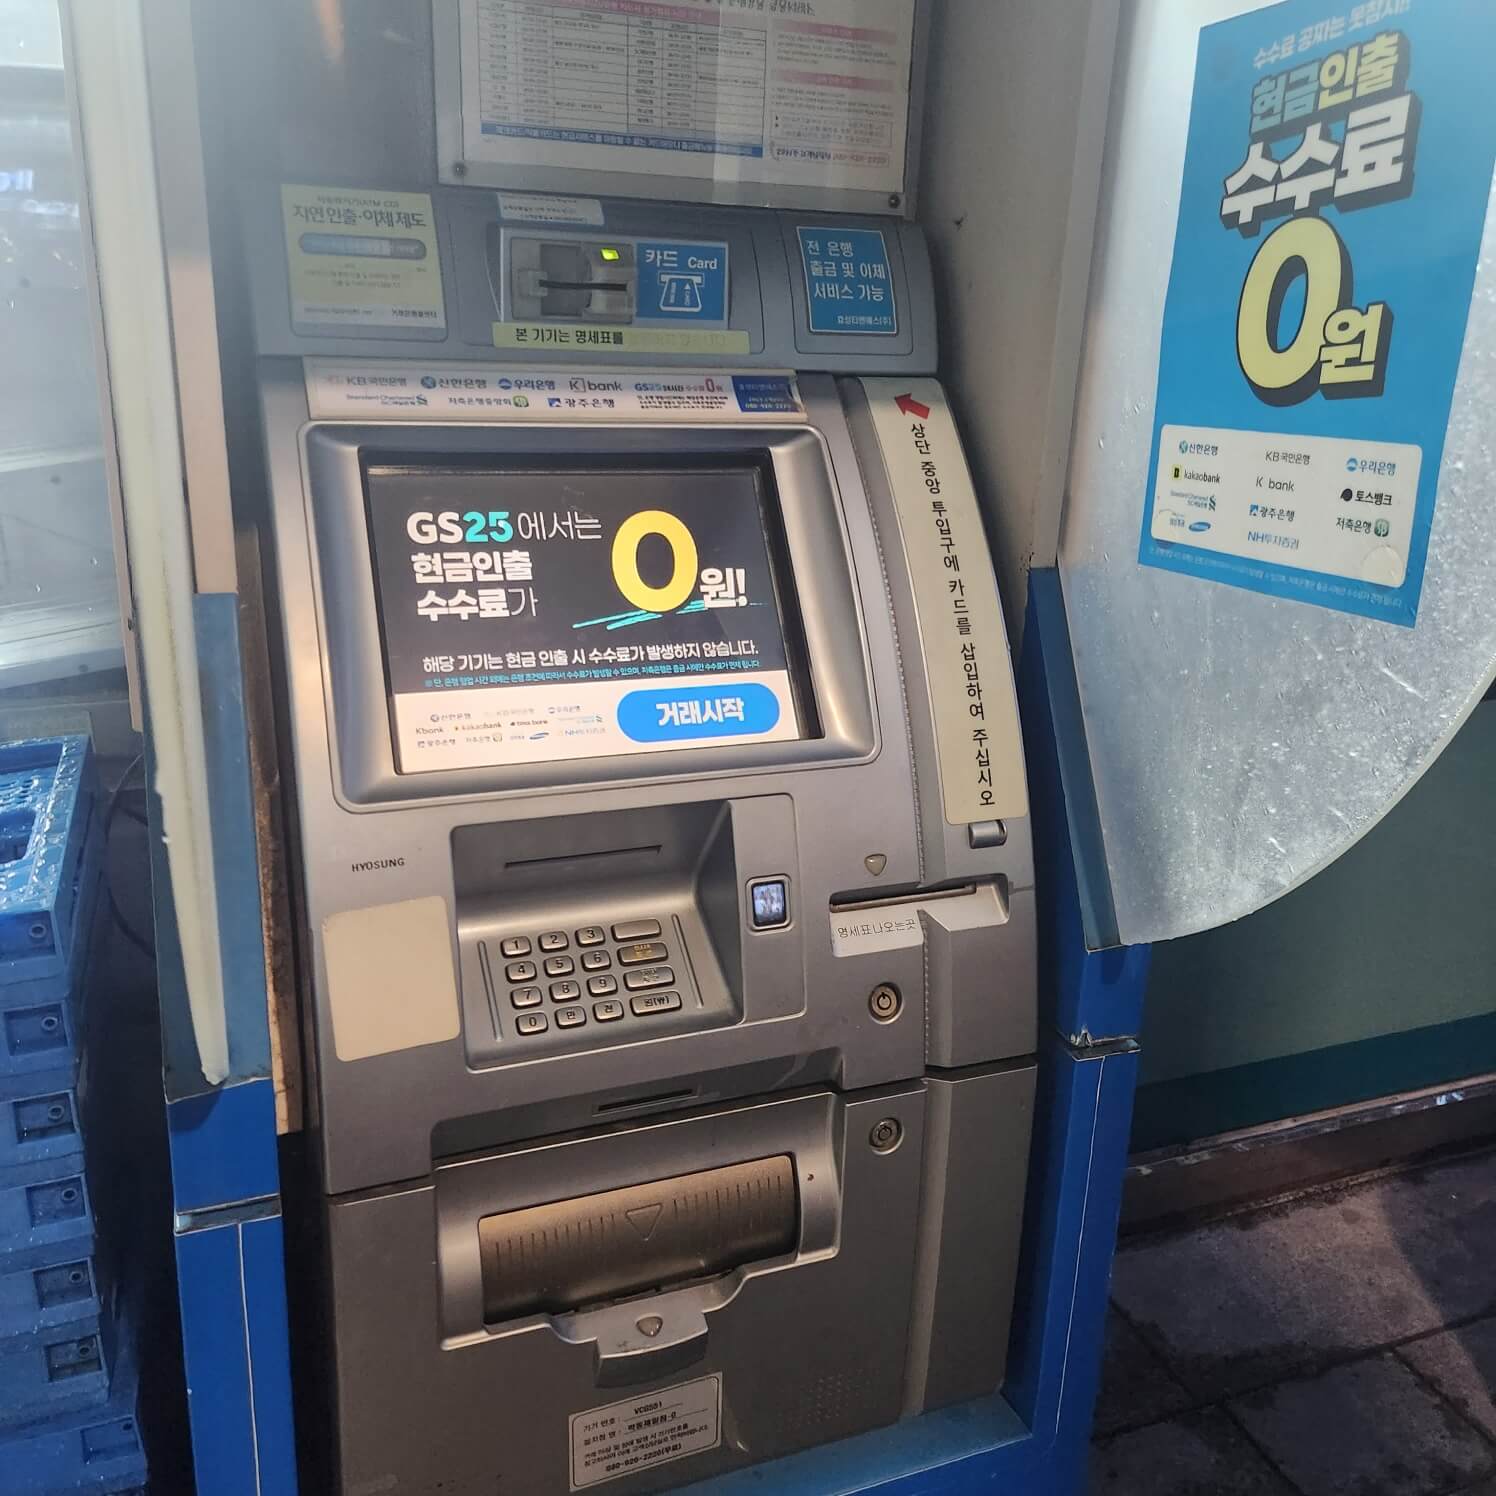 GS 25 편의점 ATM기기